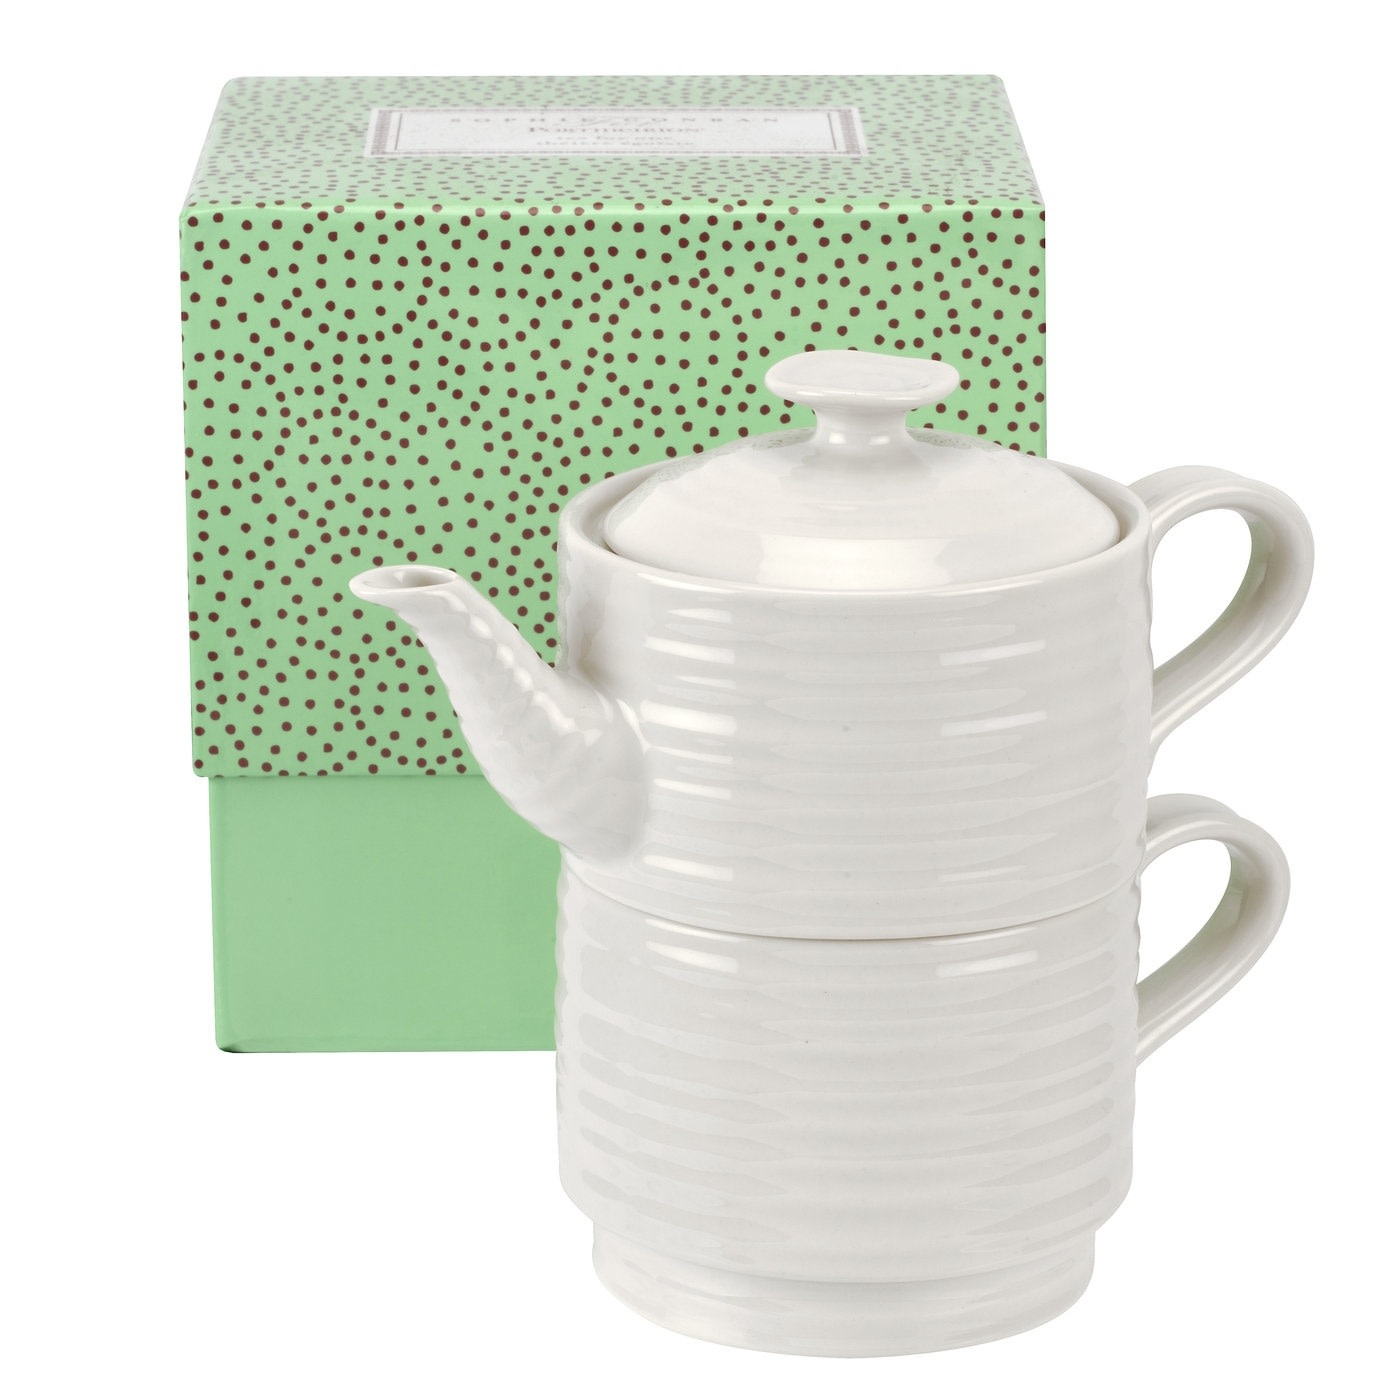 Portmeirion Sophie Conran White Tea for One